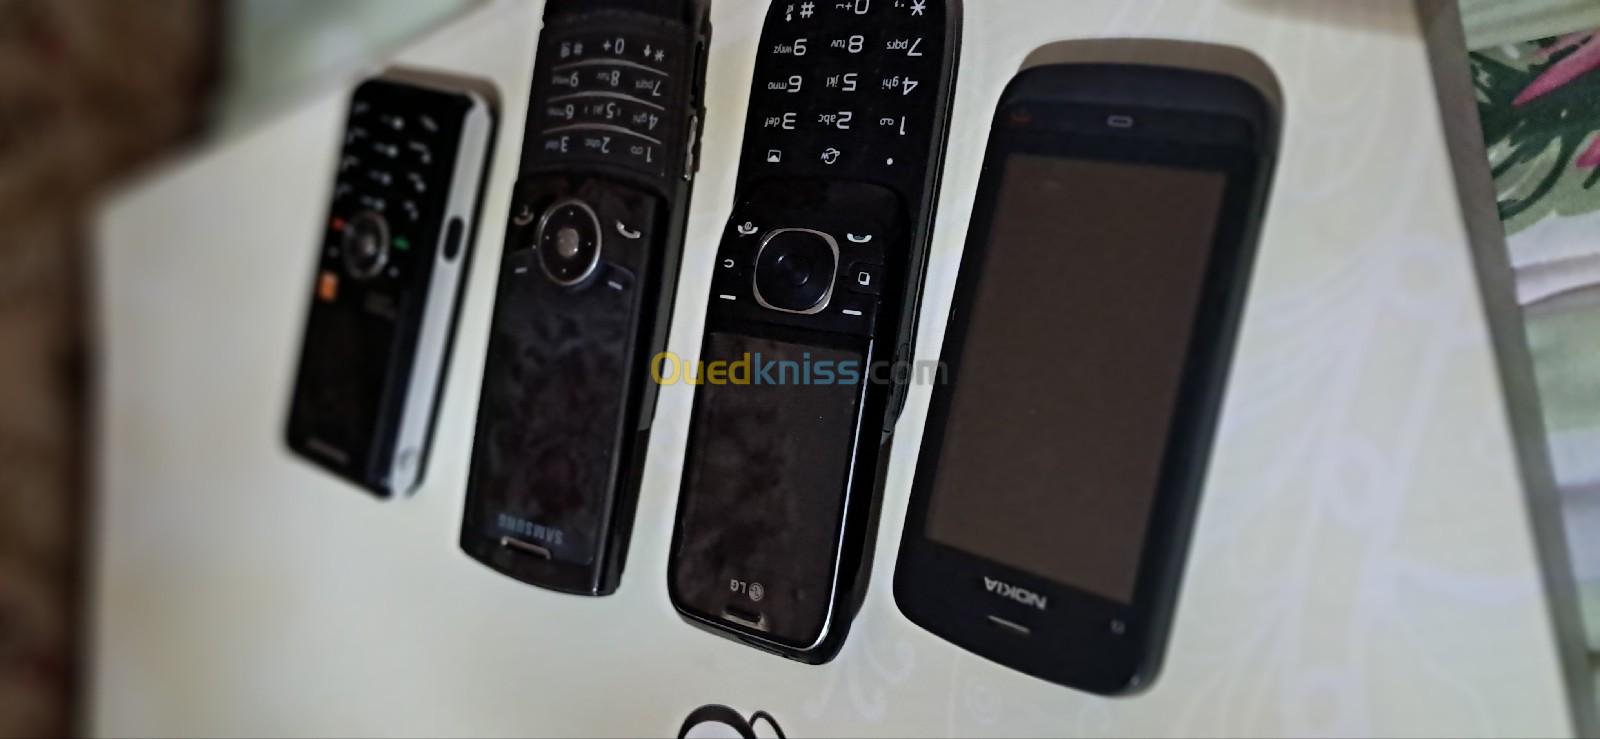 Samsung u600/ Nokia C5/ LG Gu280 Samsung noria LG